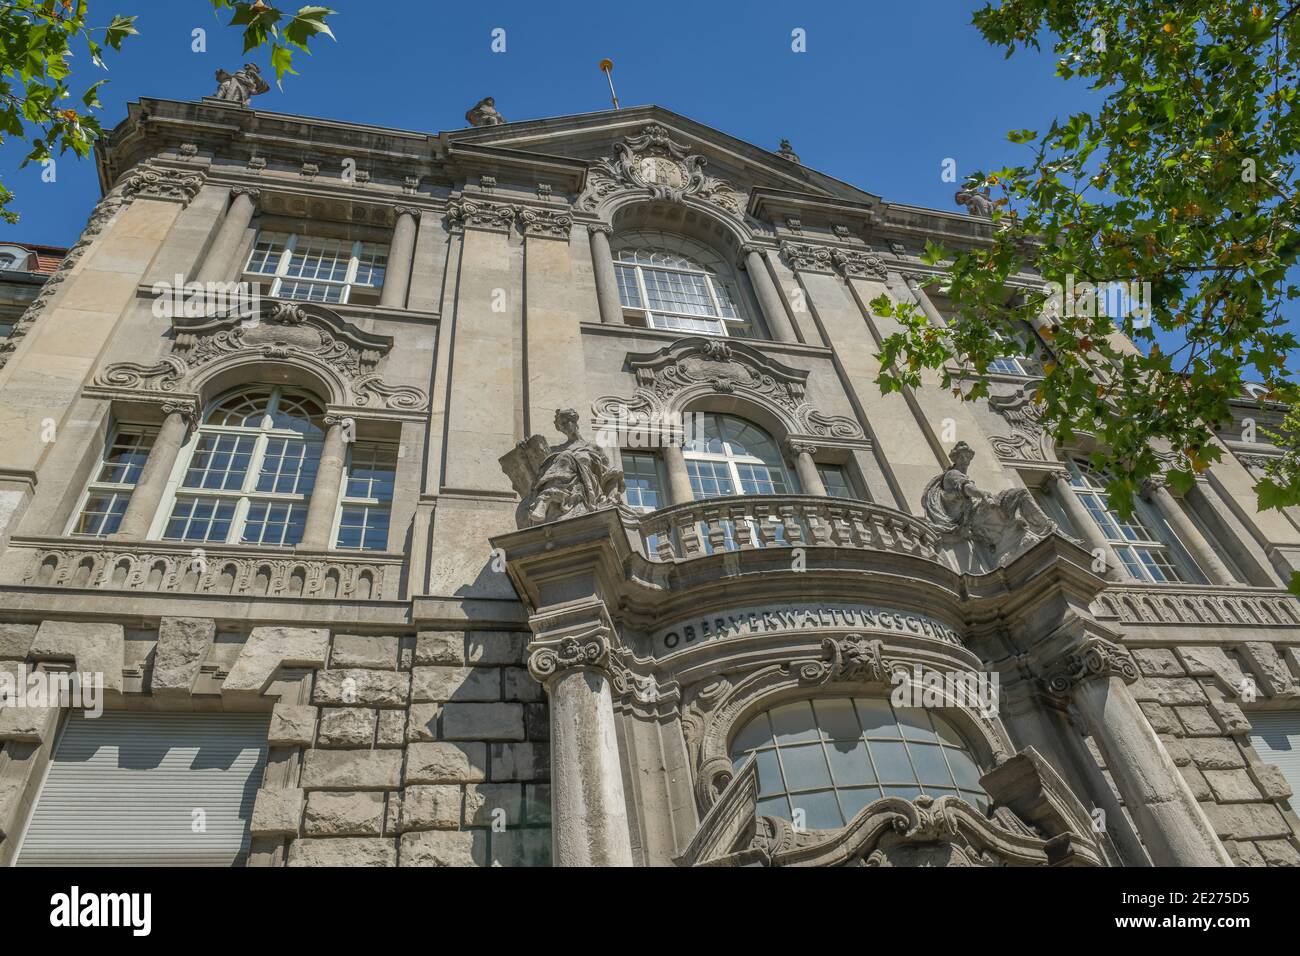 Amtsgericht, Hardenbergstraße, Charlottenburg, Berlin, Deutschland Stock Photo